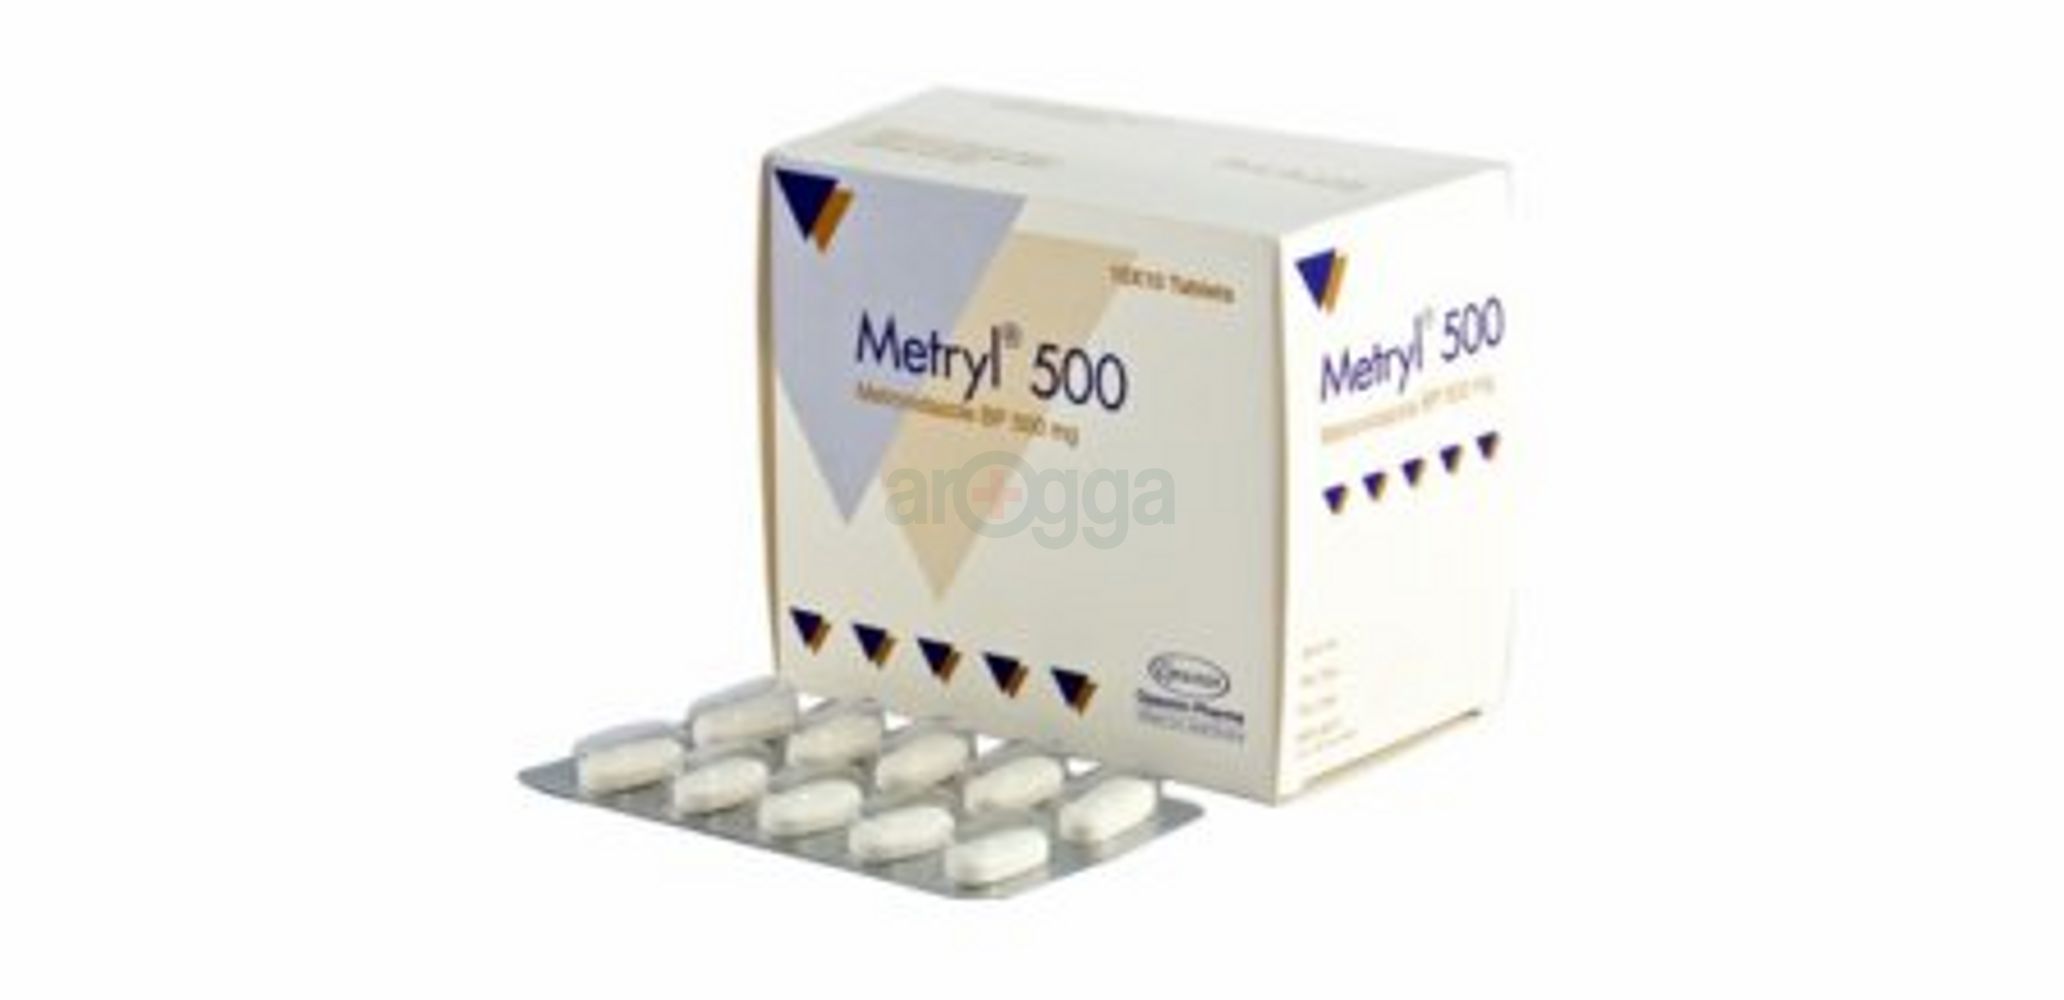 Metryl 500